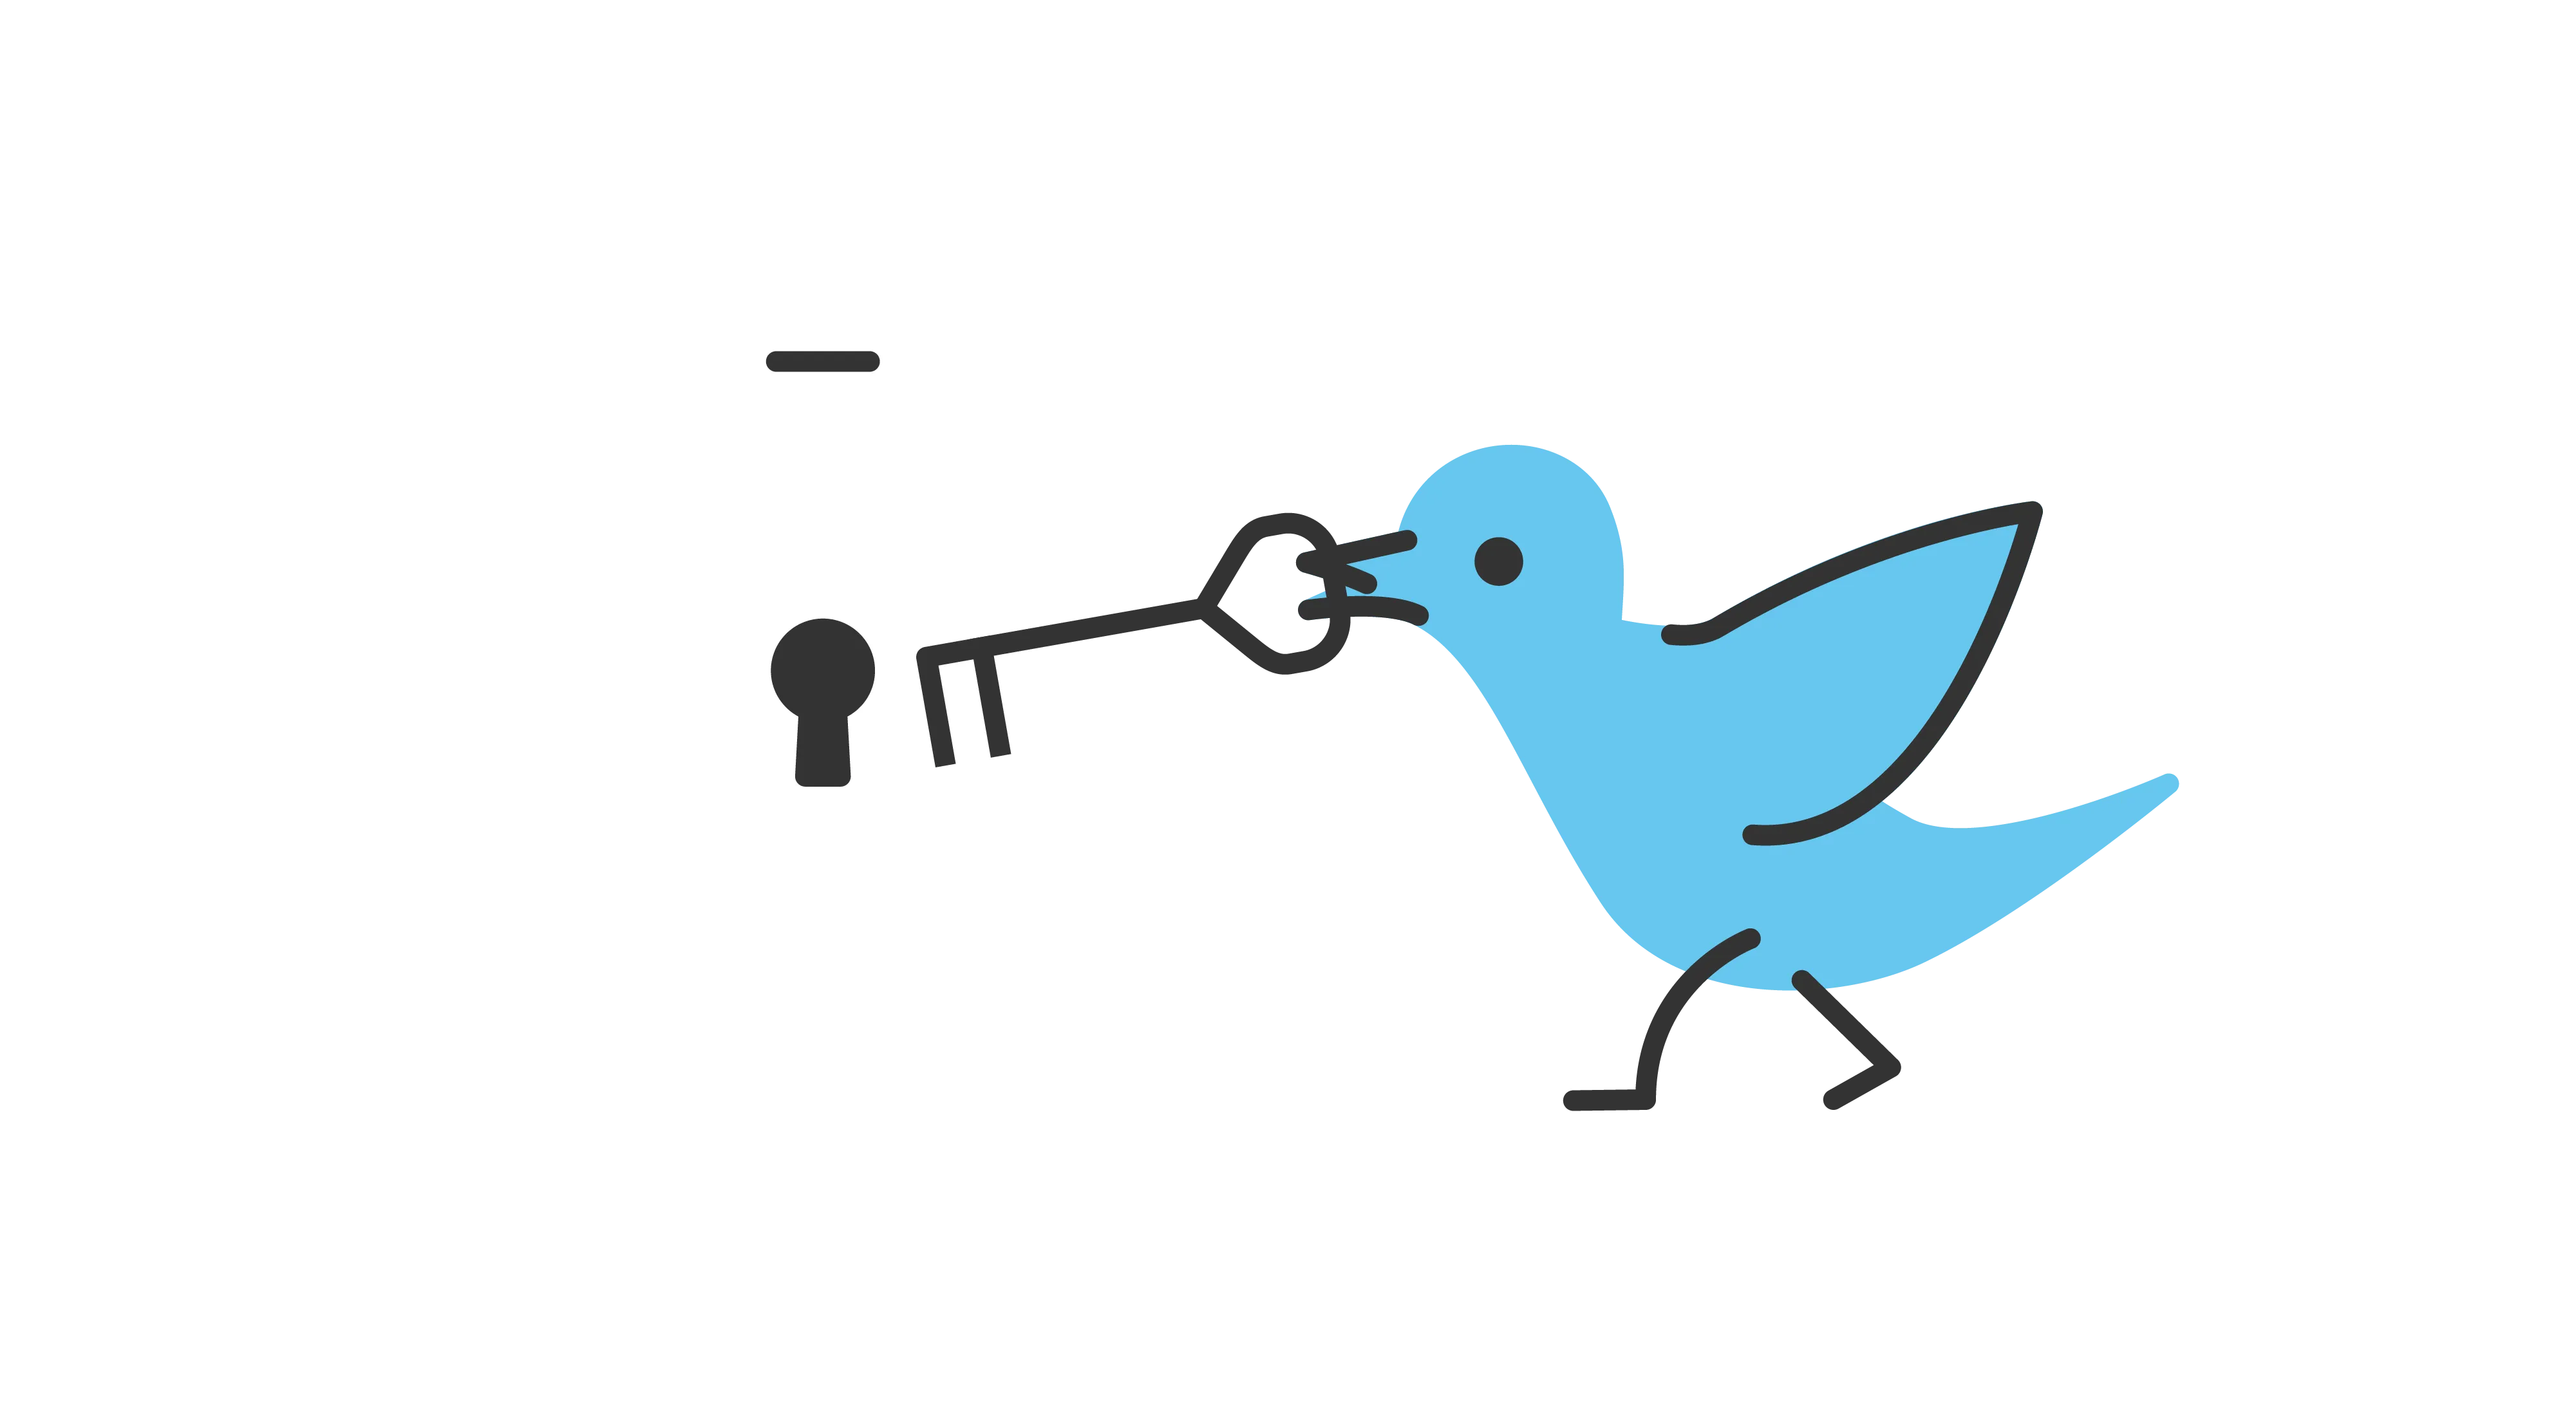 Bird with a key